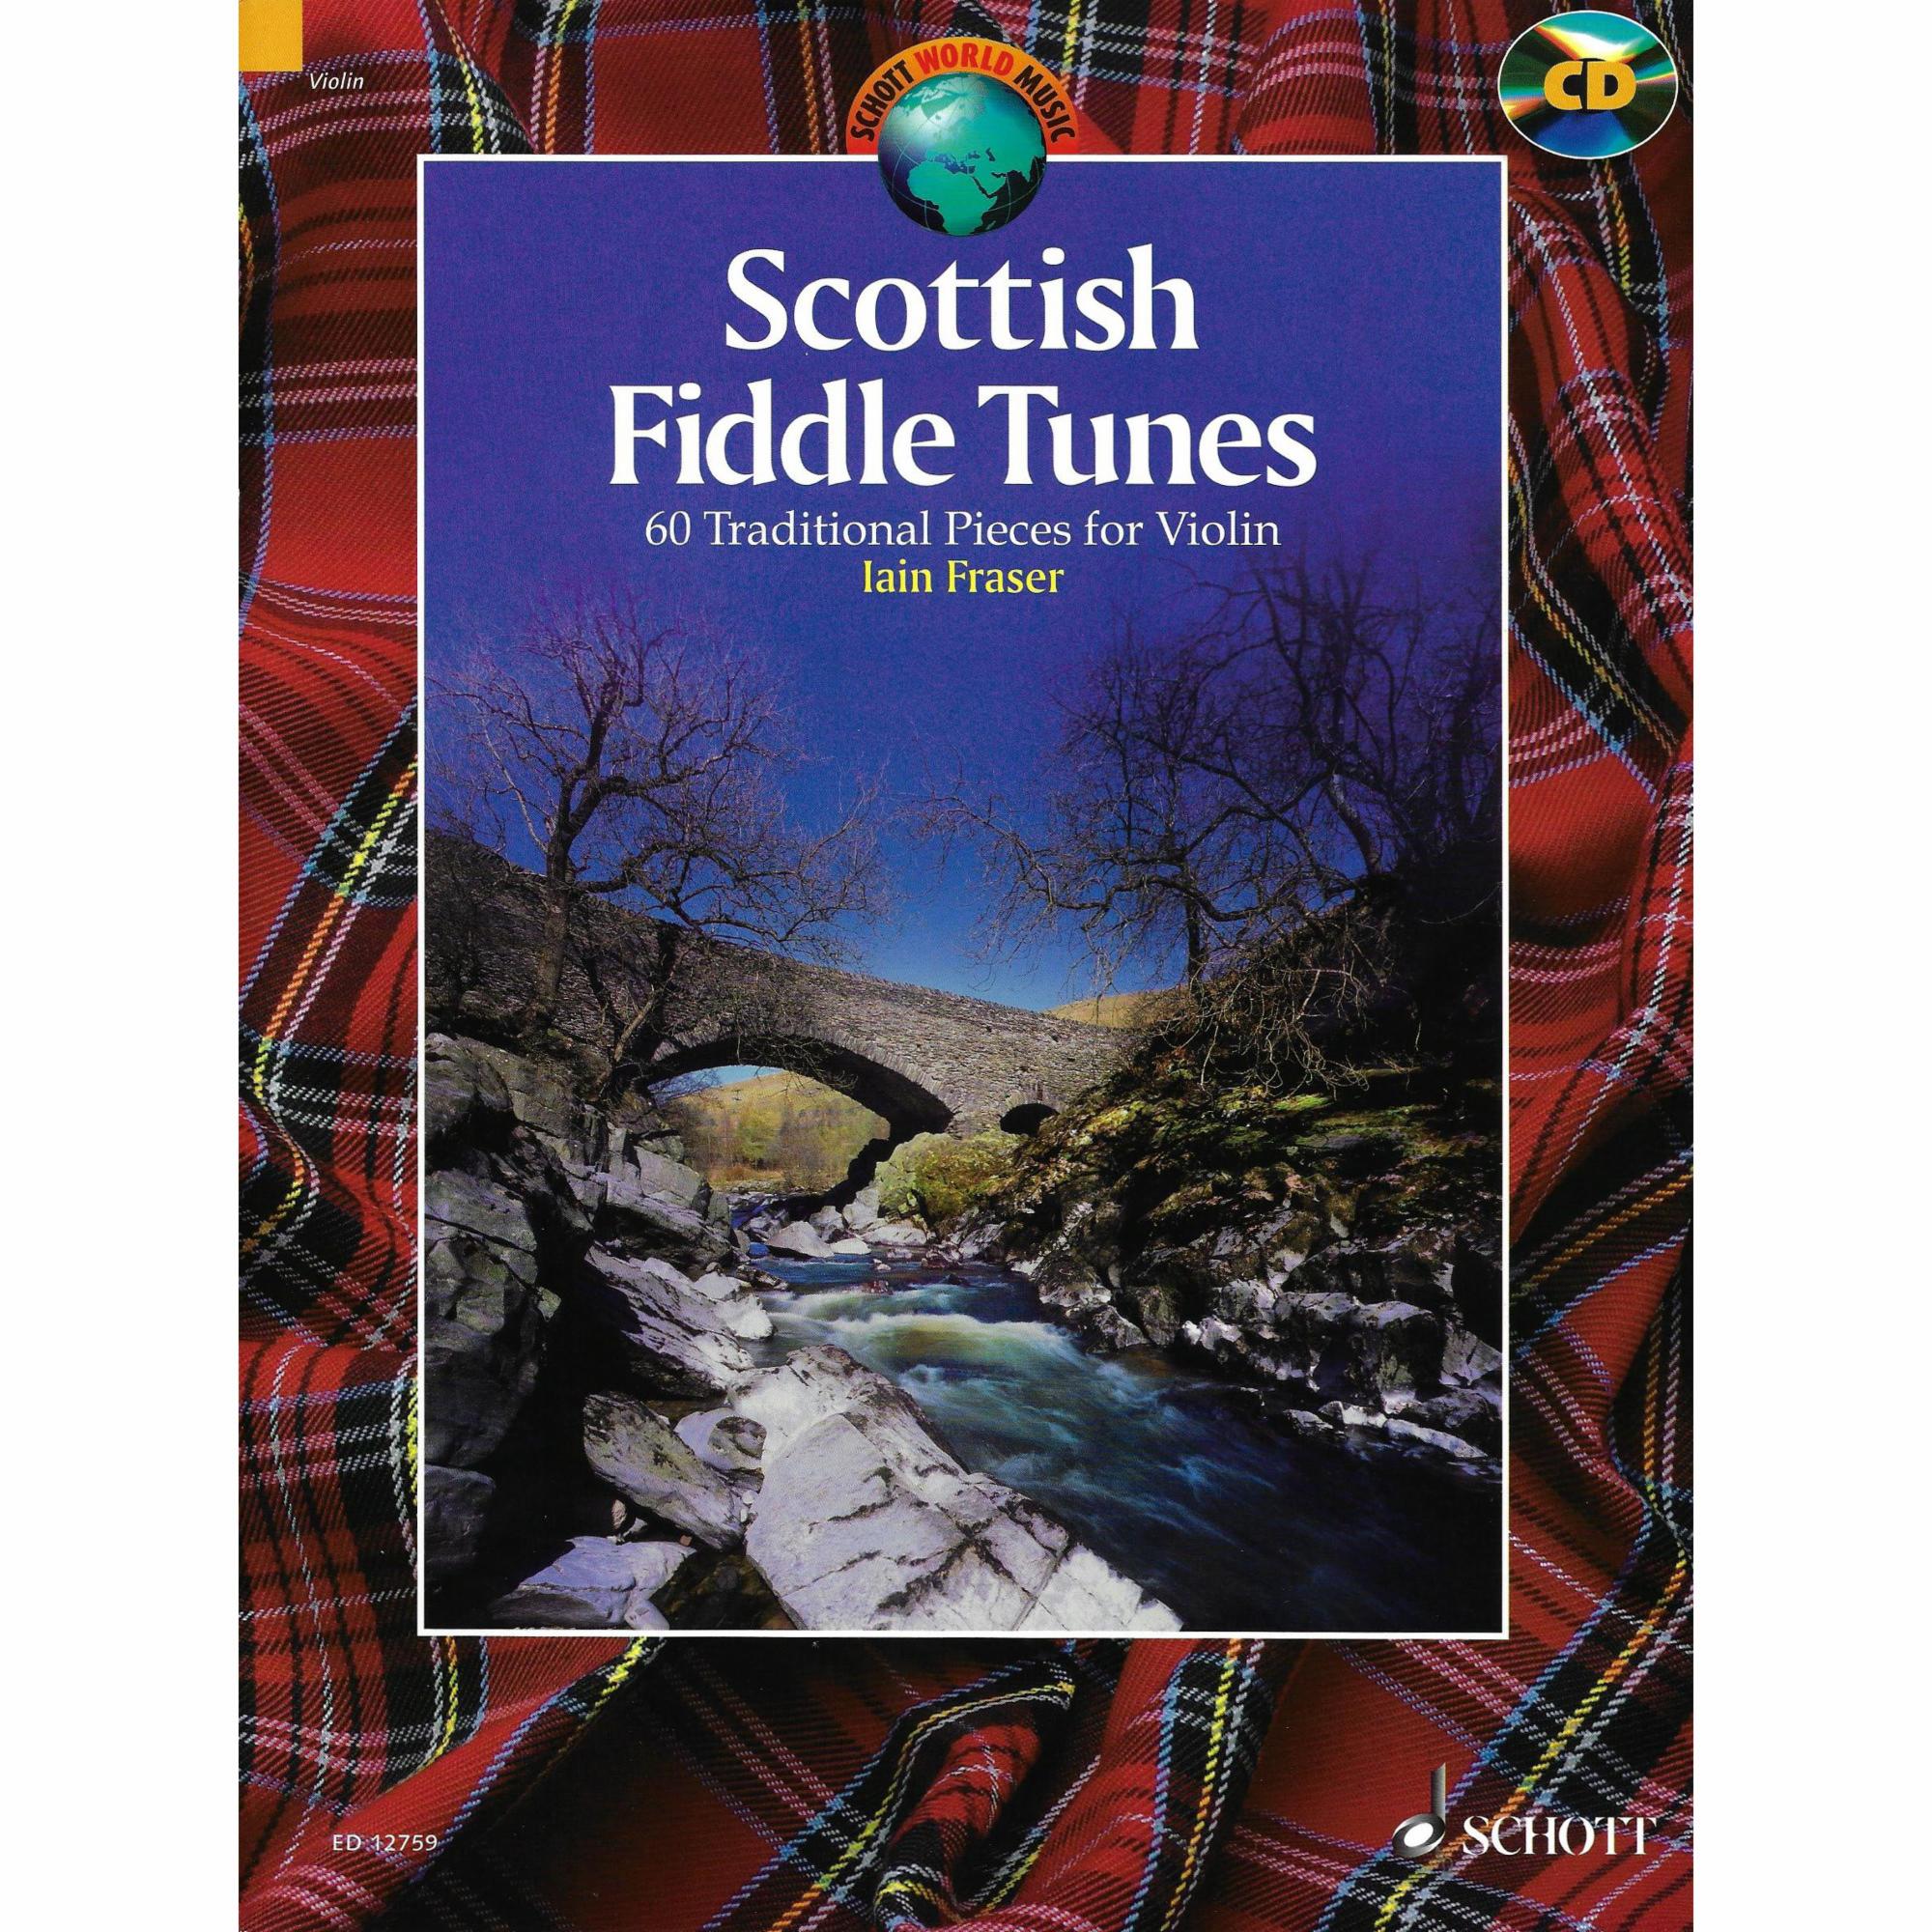 Scottish Fiddle Tunes